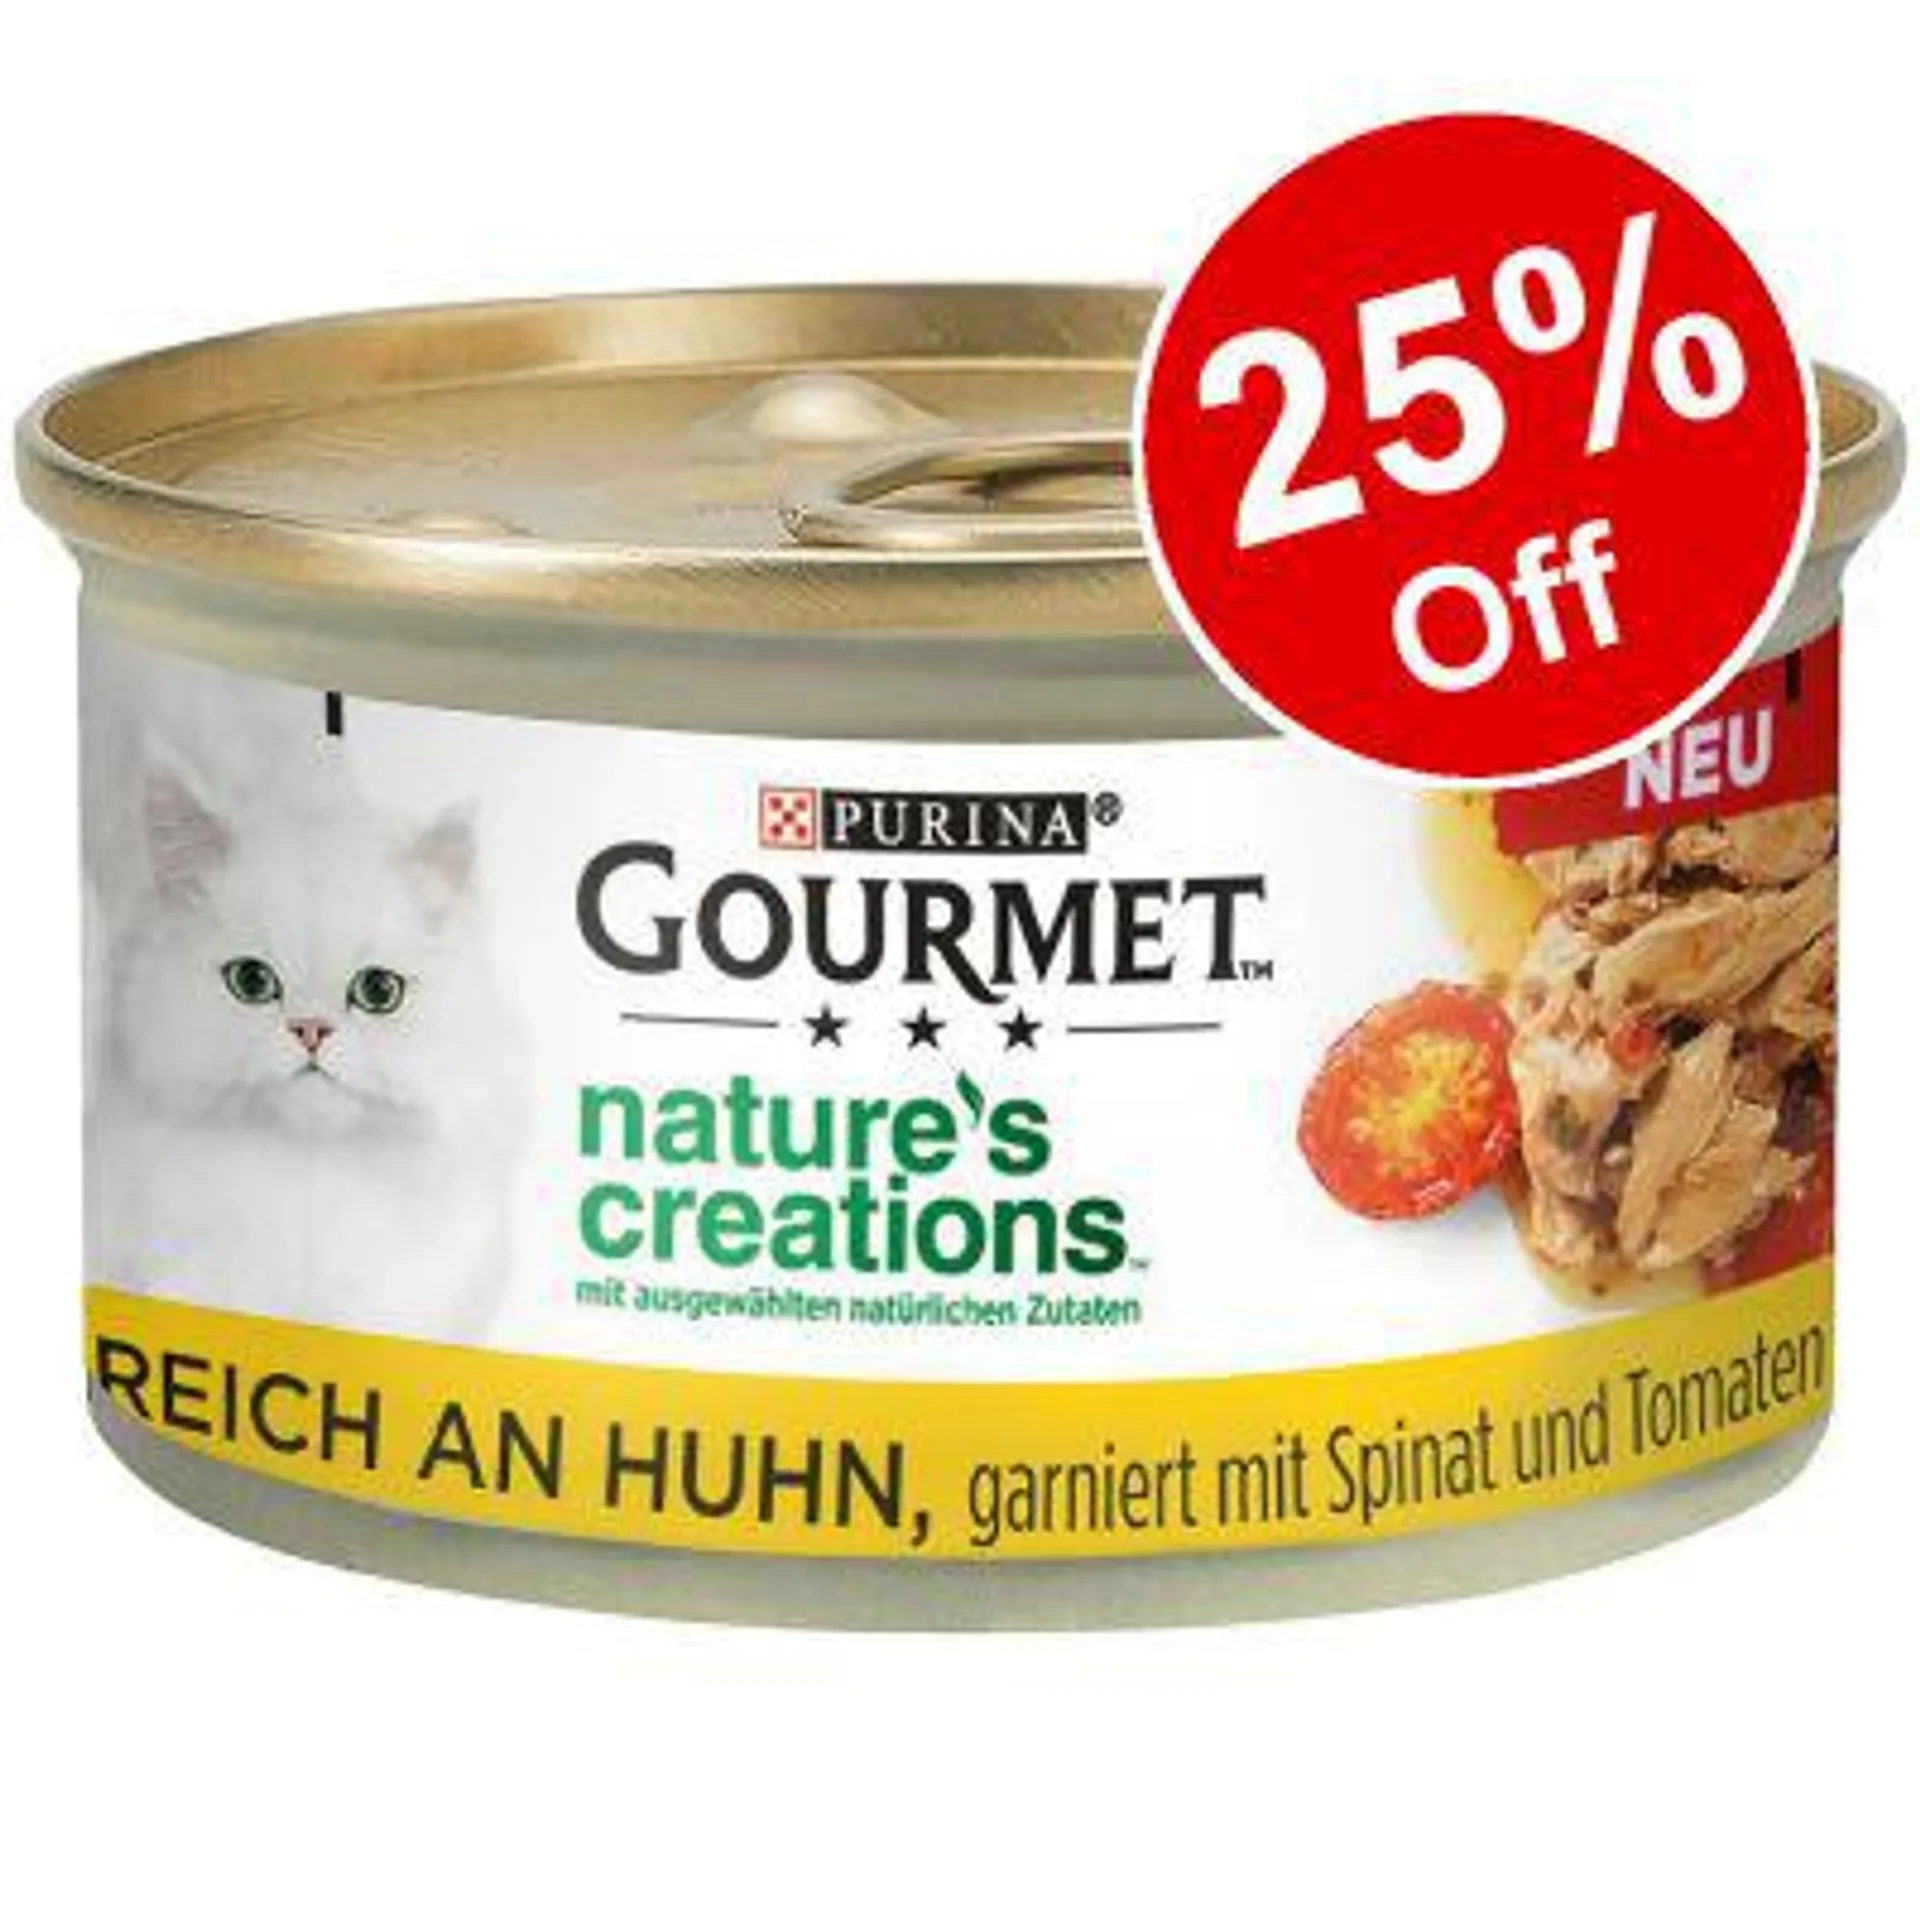 24 x 85g Gourmet Nature’s Creations Wet Cat Food - 25% Off!*